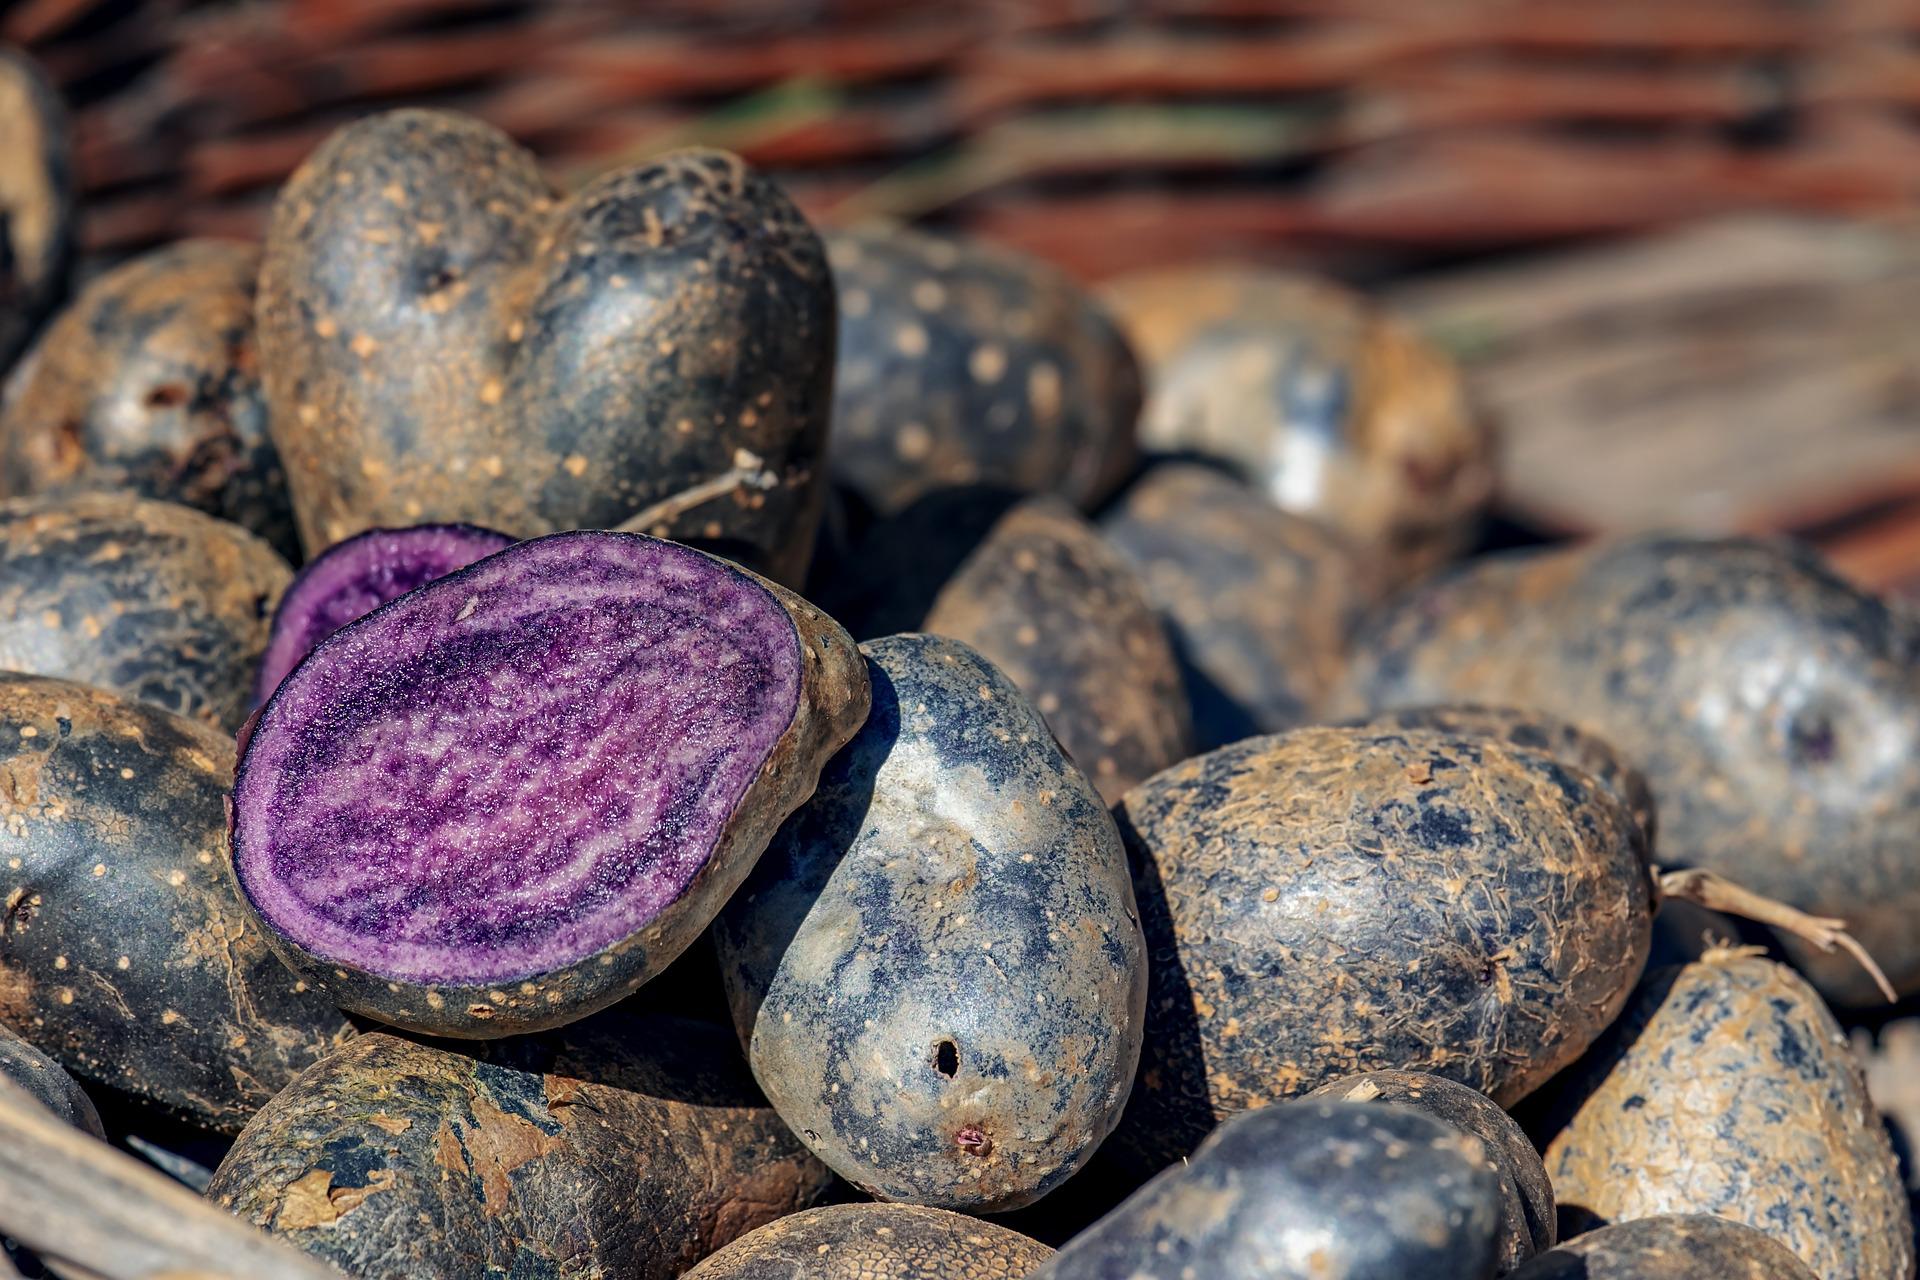 Purple potato hit with consumers